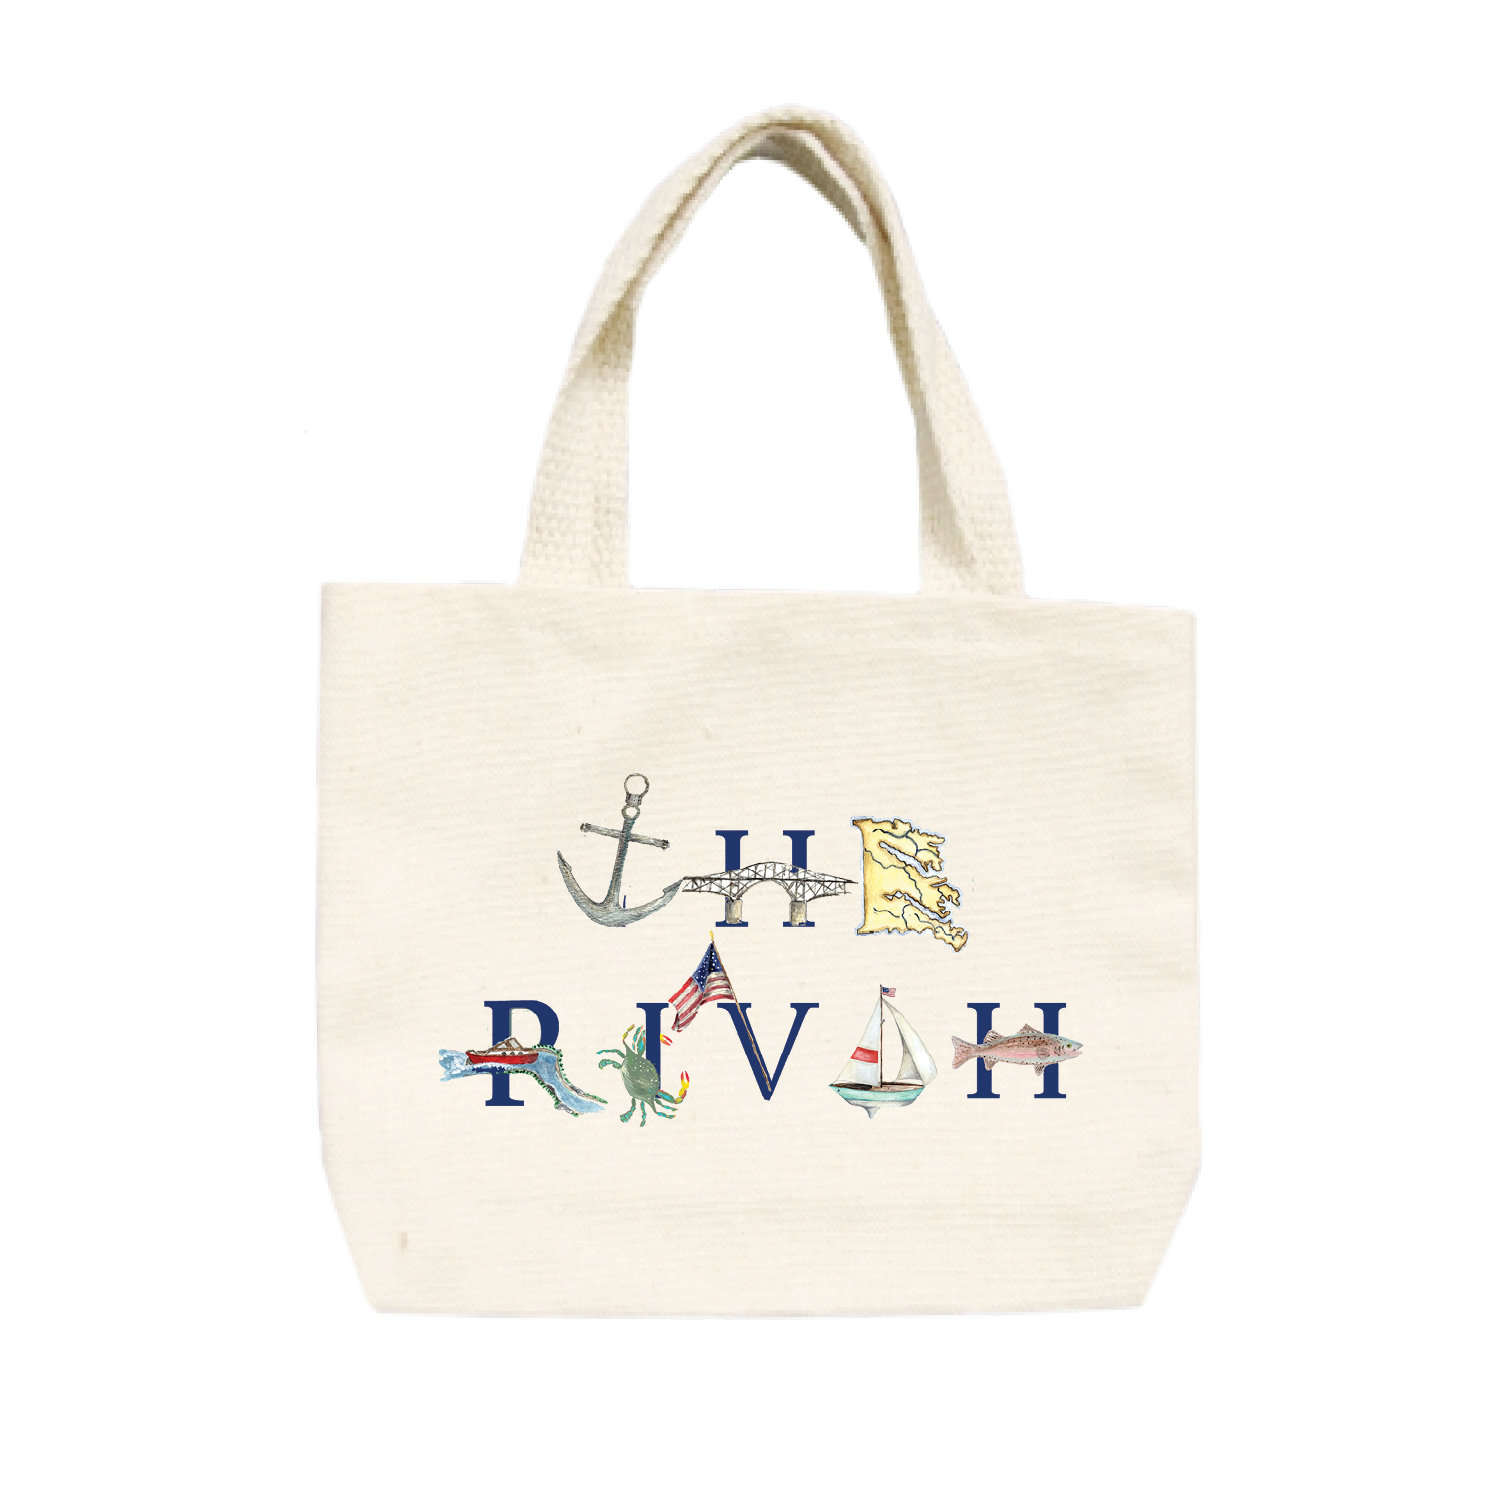 The Rivah small tote